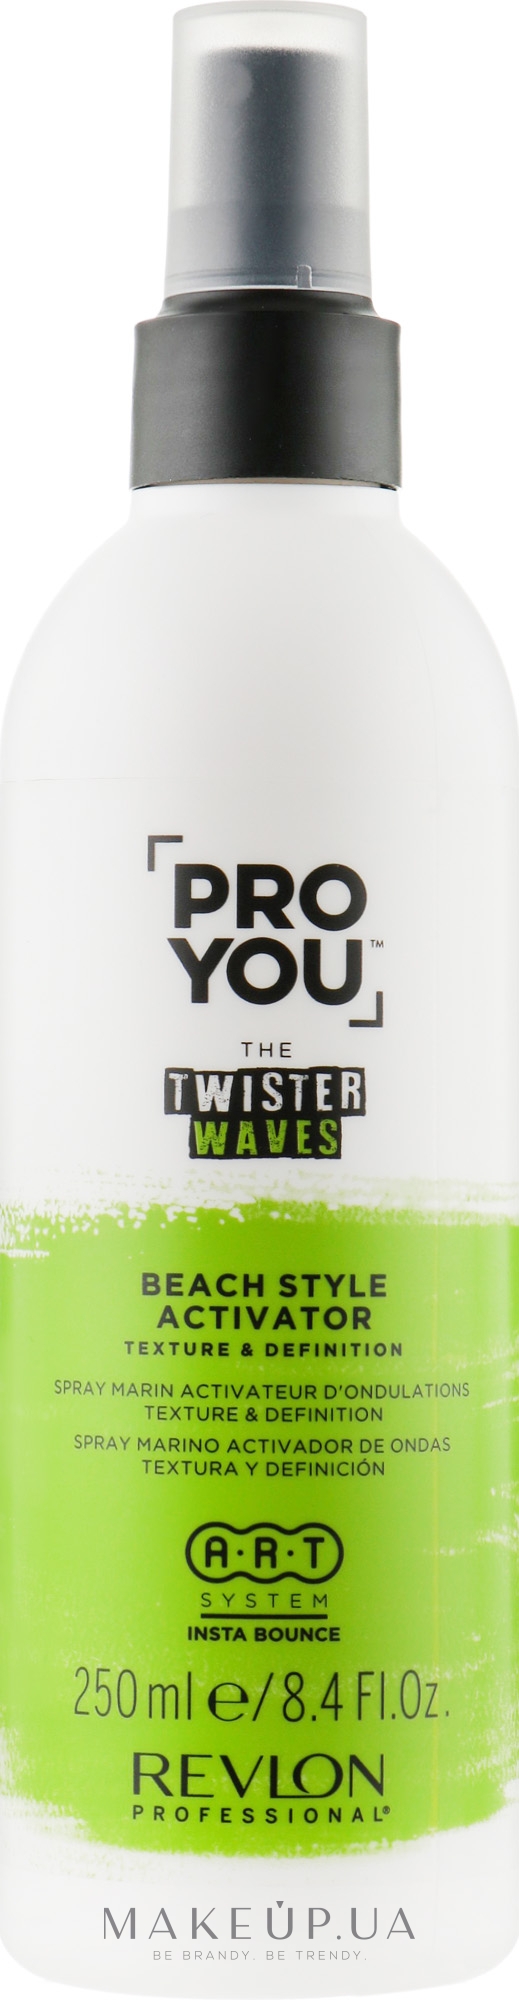 Спрей для пляжной укладки - Revlon Professional Pro You New Twister Waves Beach Style Activator — фото 250ml